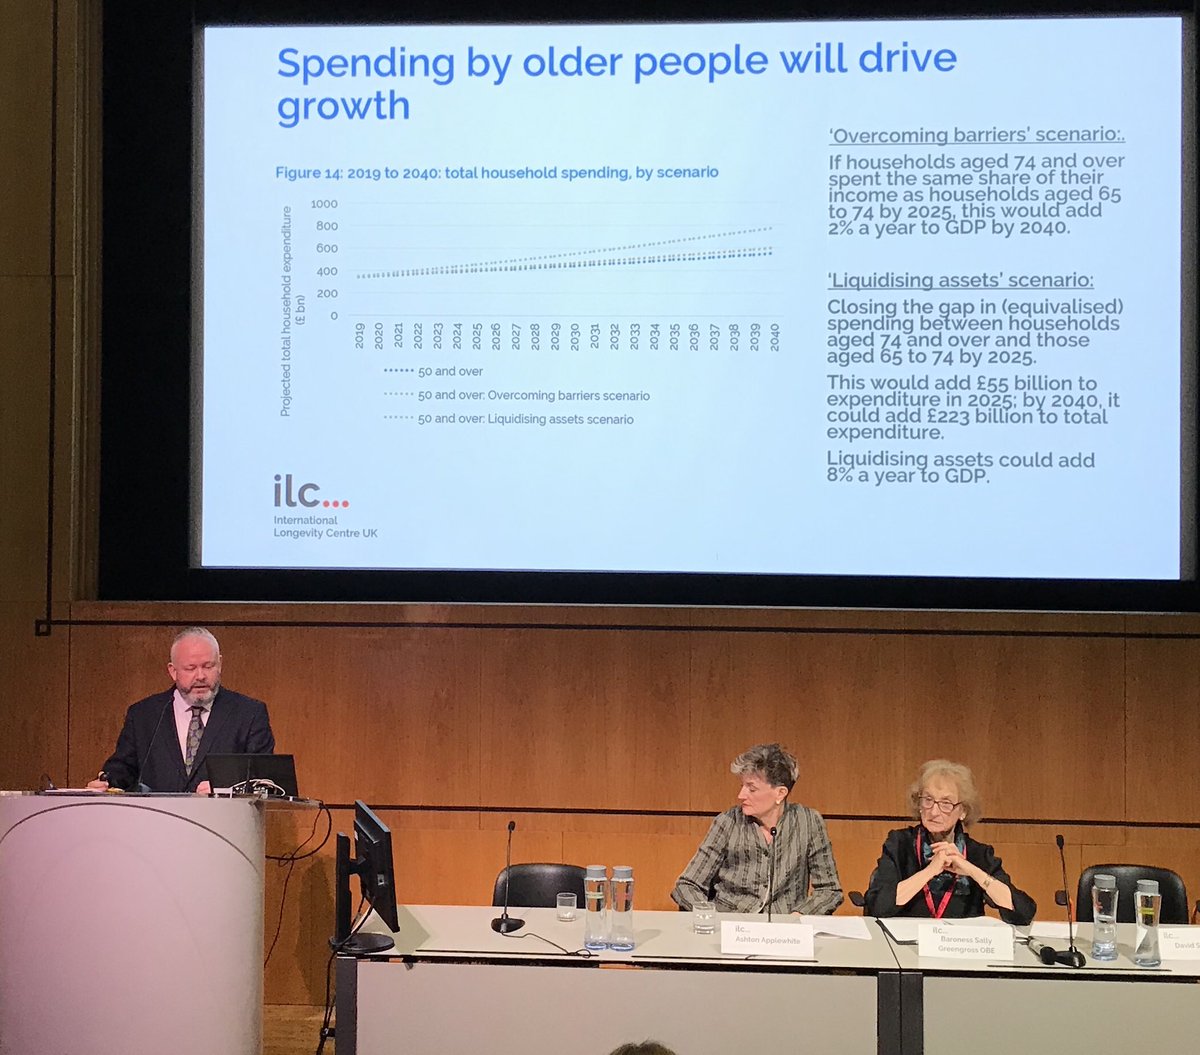 Spending by older people will drive economic growth @ILC @mercer #futureofageing #longevitydividend